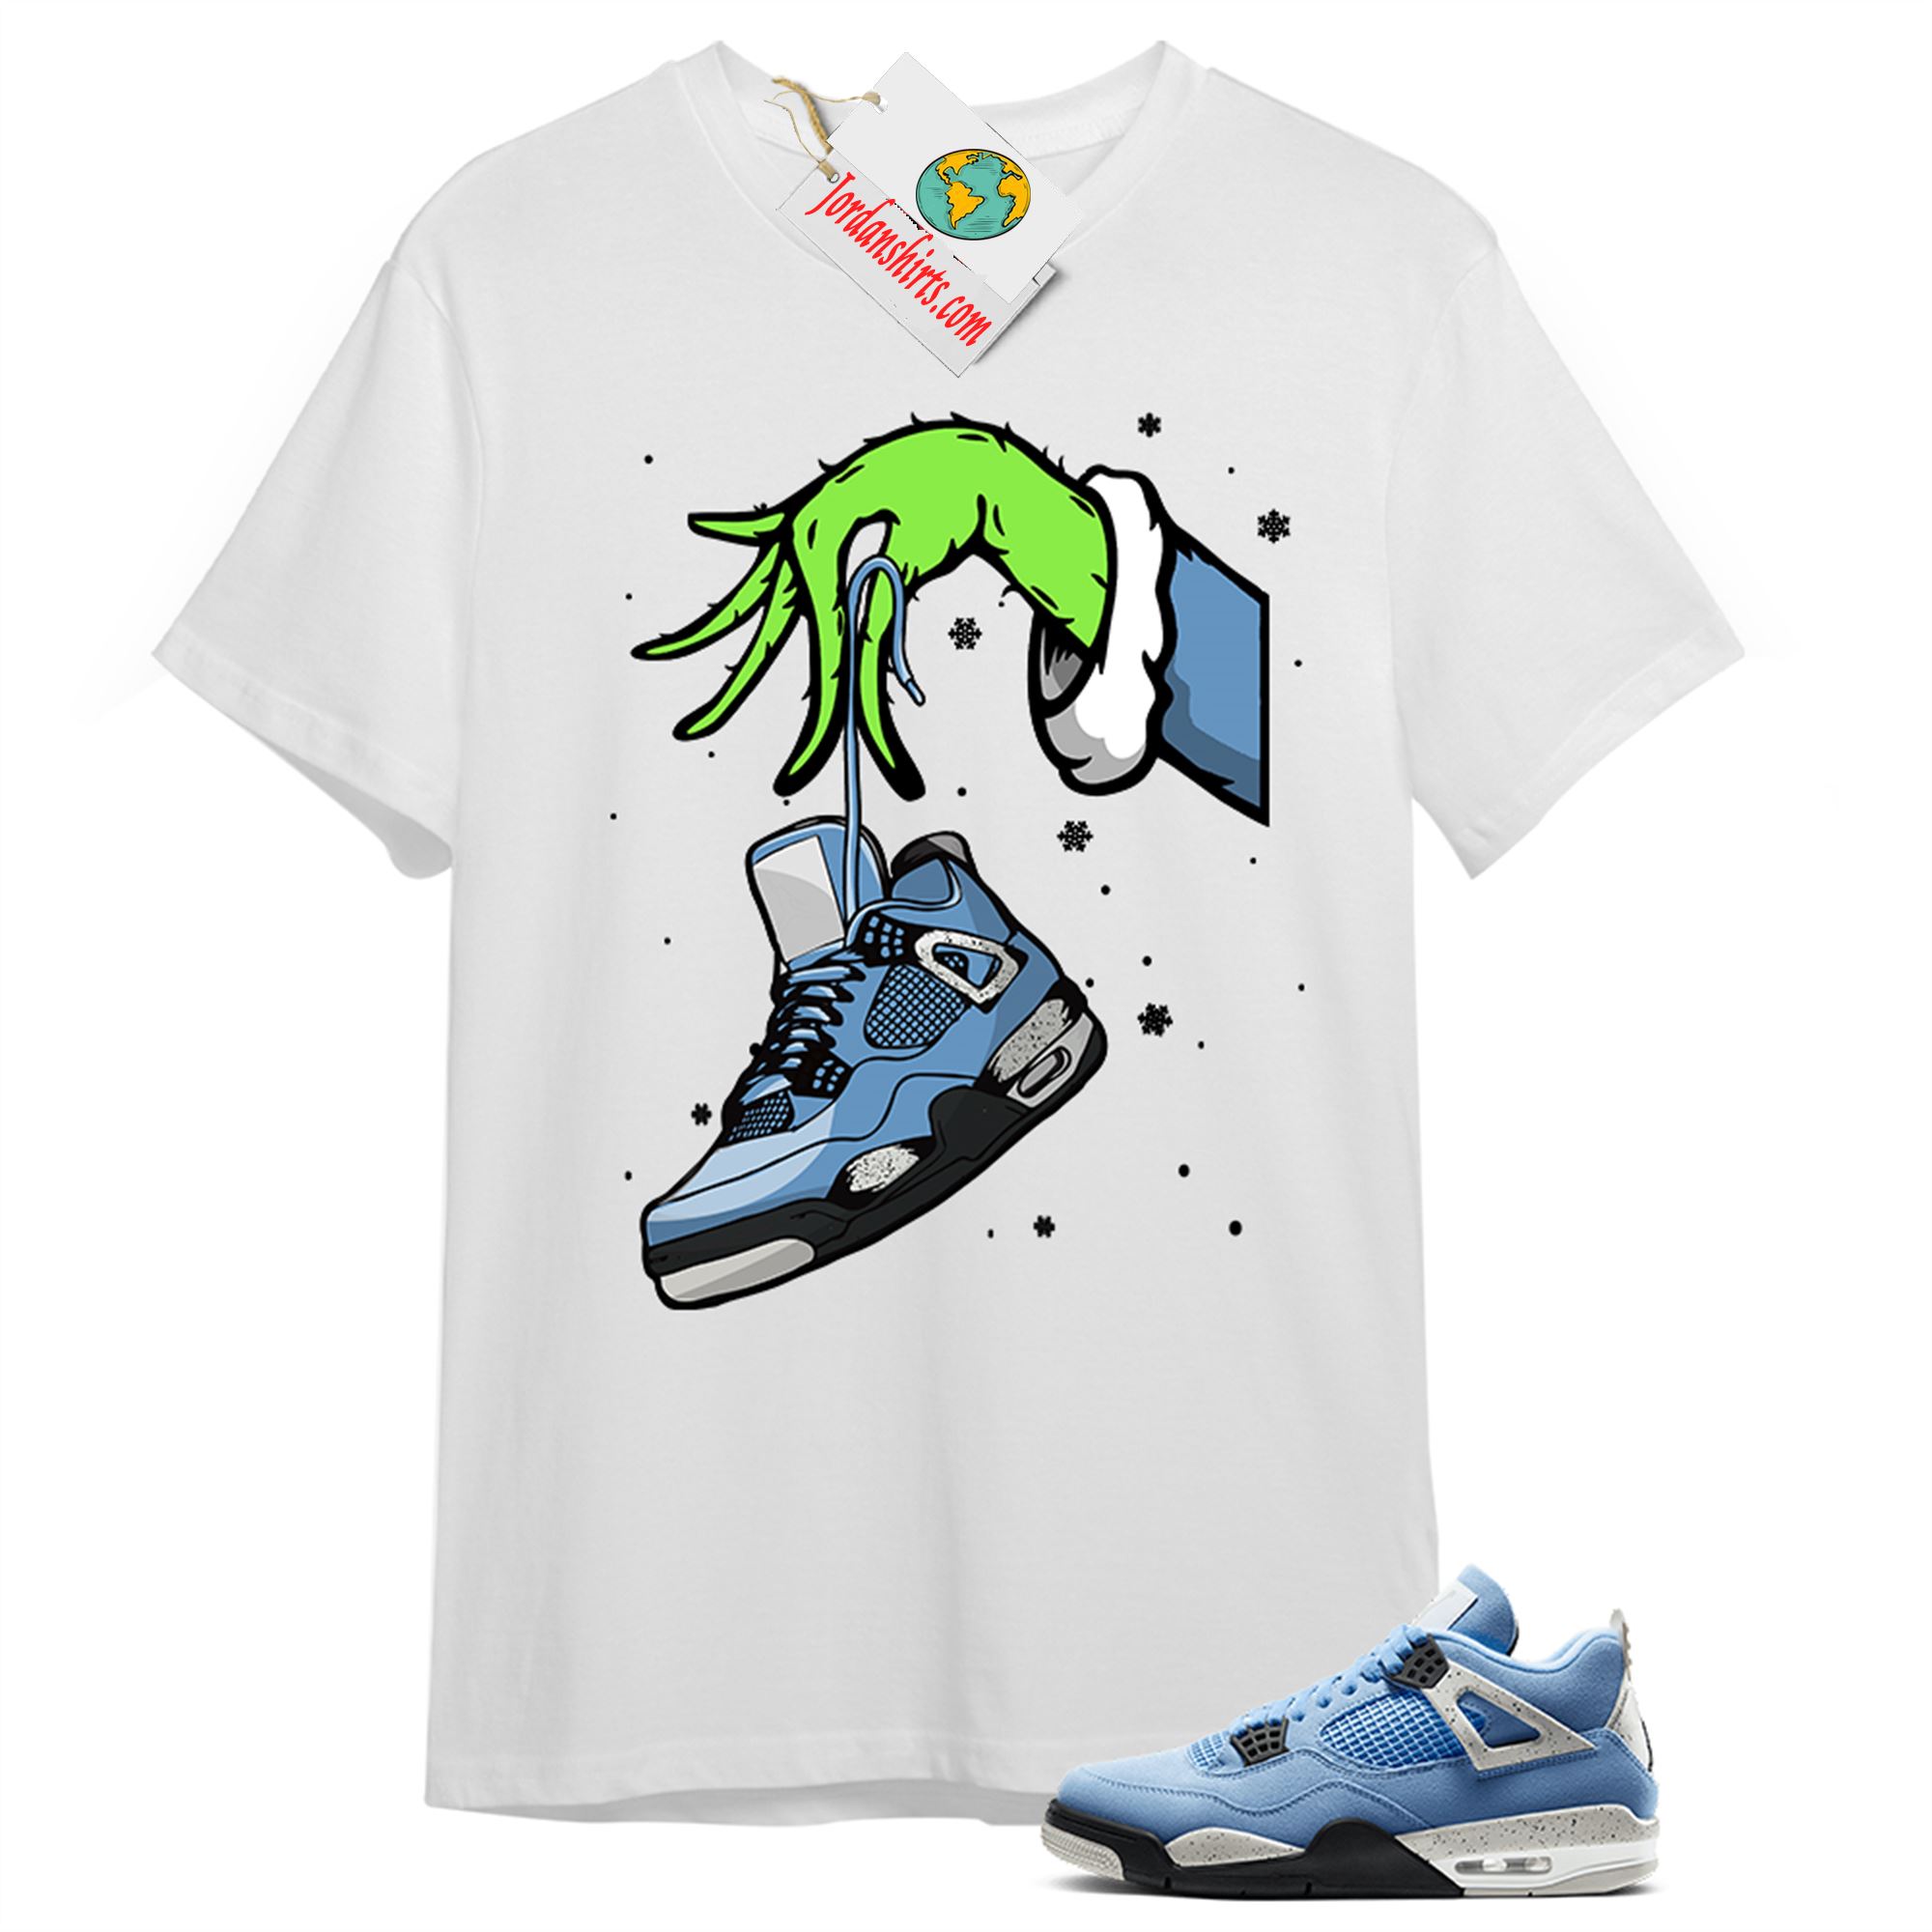 Jordan 4 Shirt, Grinch Hand White T-shirt Air Jordan 4 University Blue 4s Size Up To 5xl